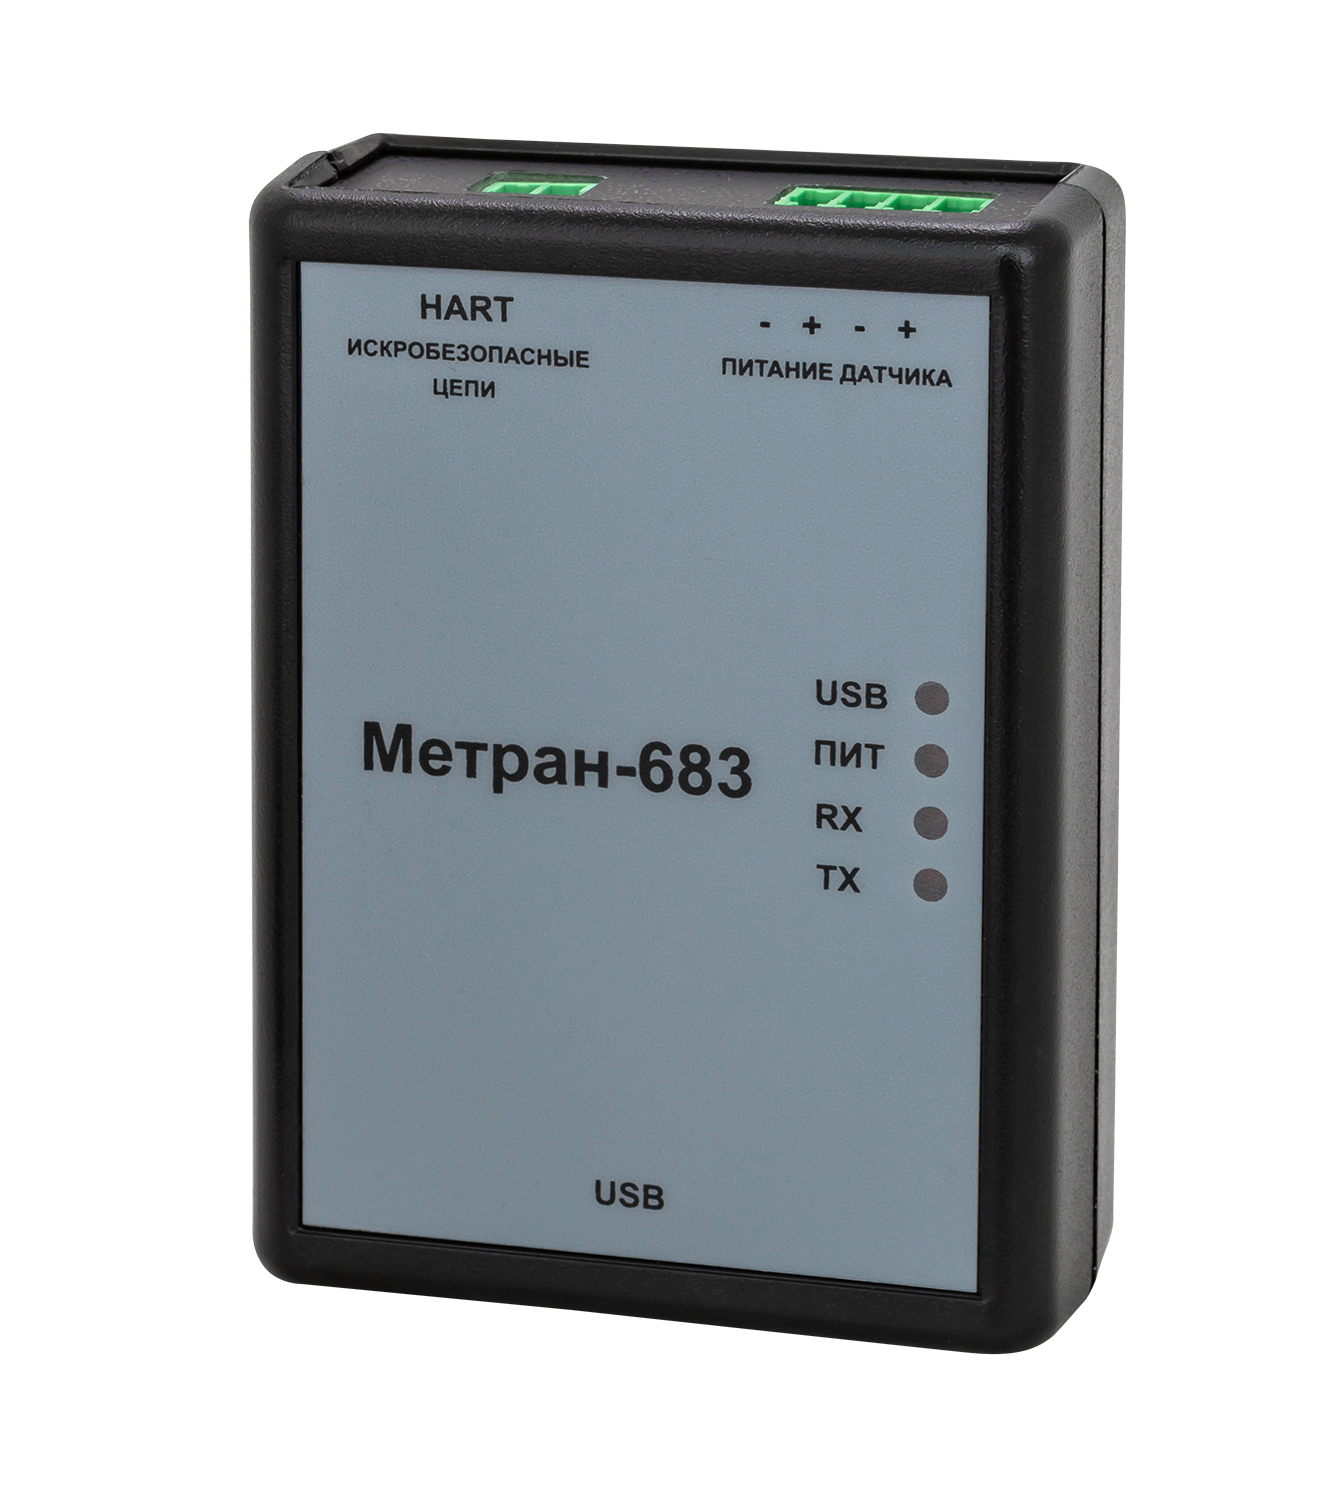 Hart-USB модем Метран-683